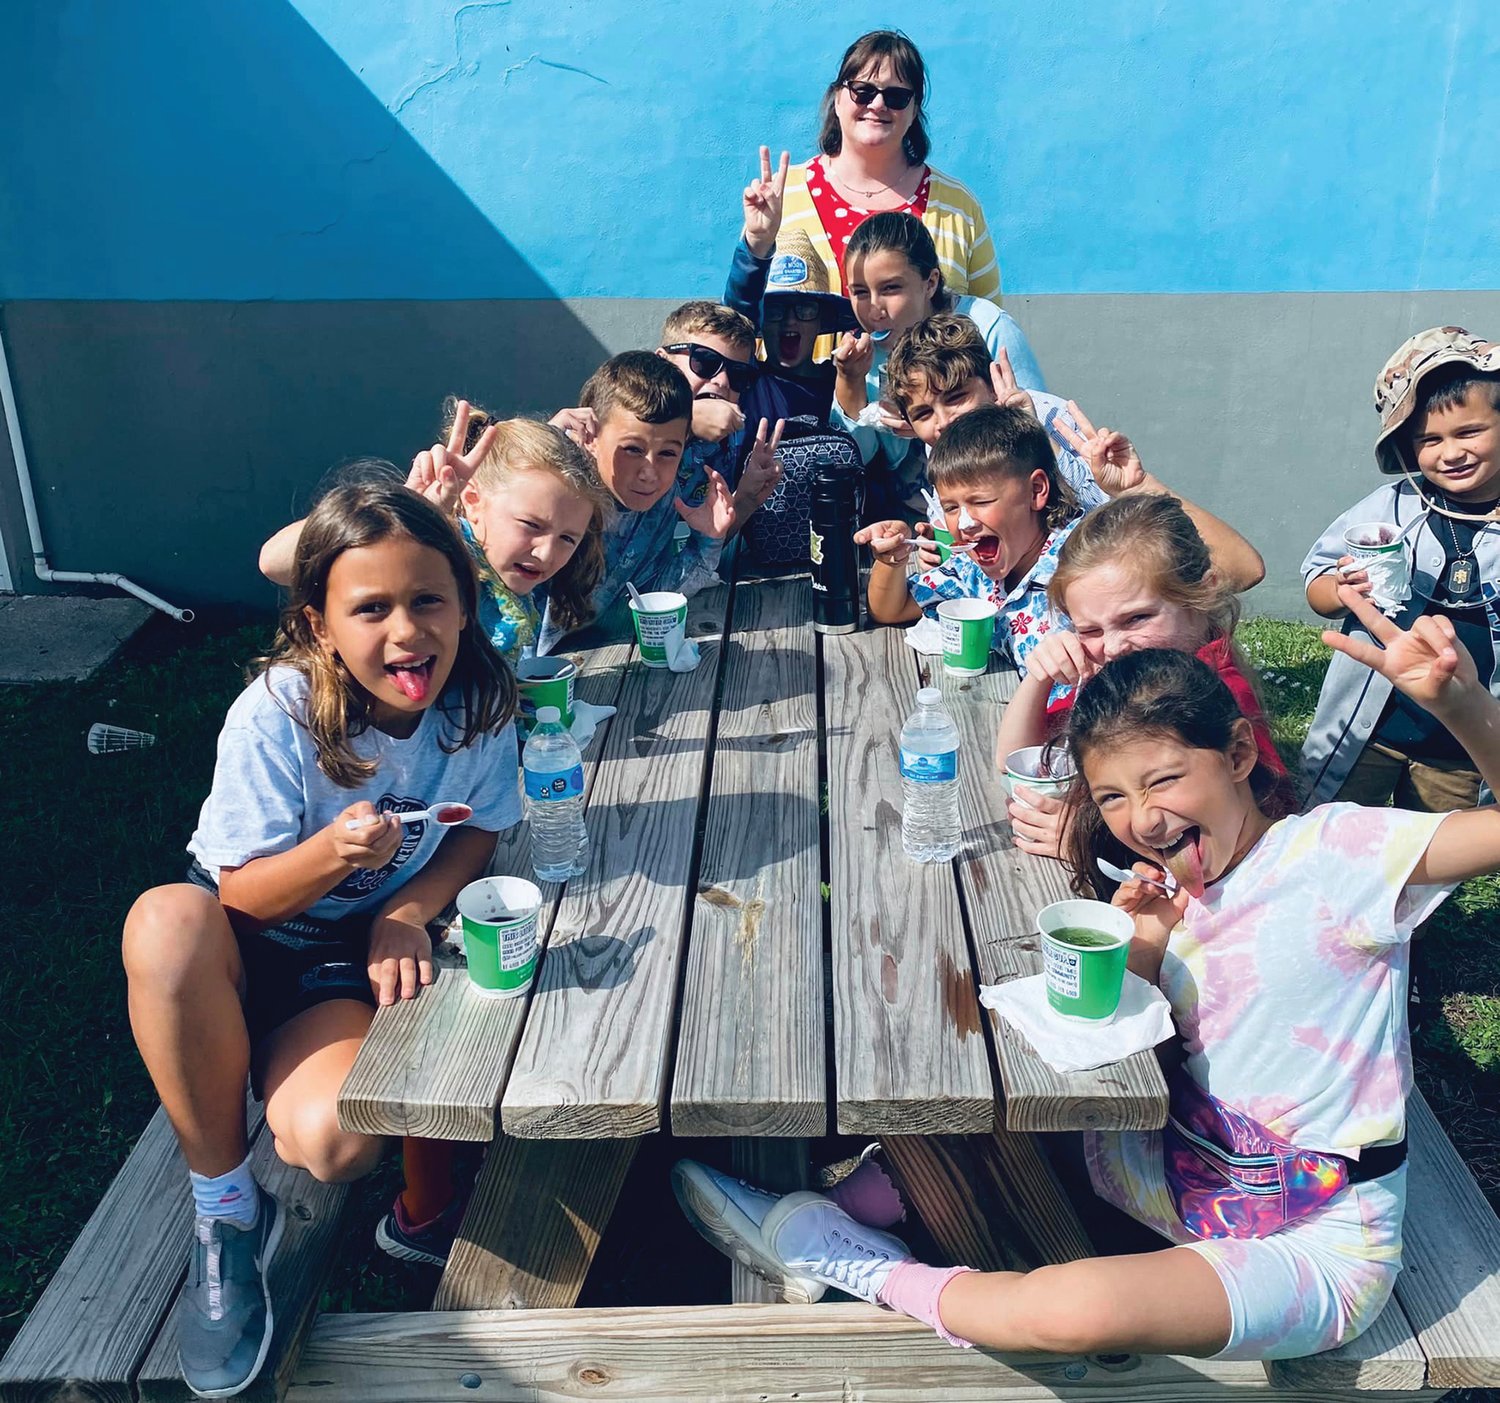 On Friday, the kids all enjoyed a Kona Ice treat.